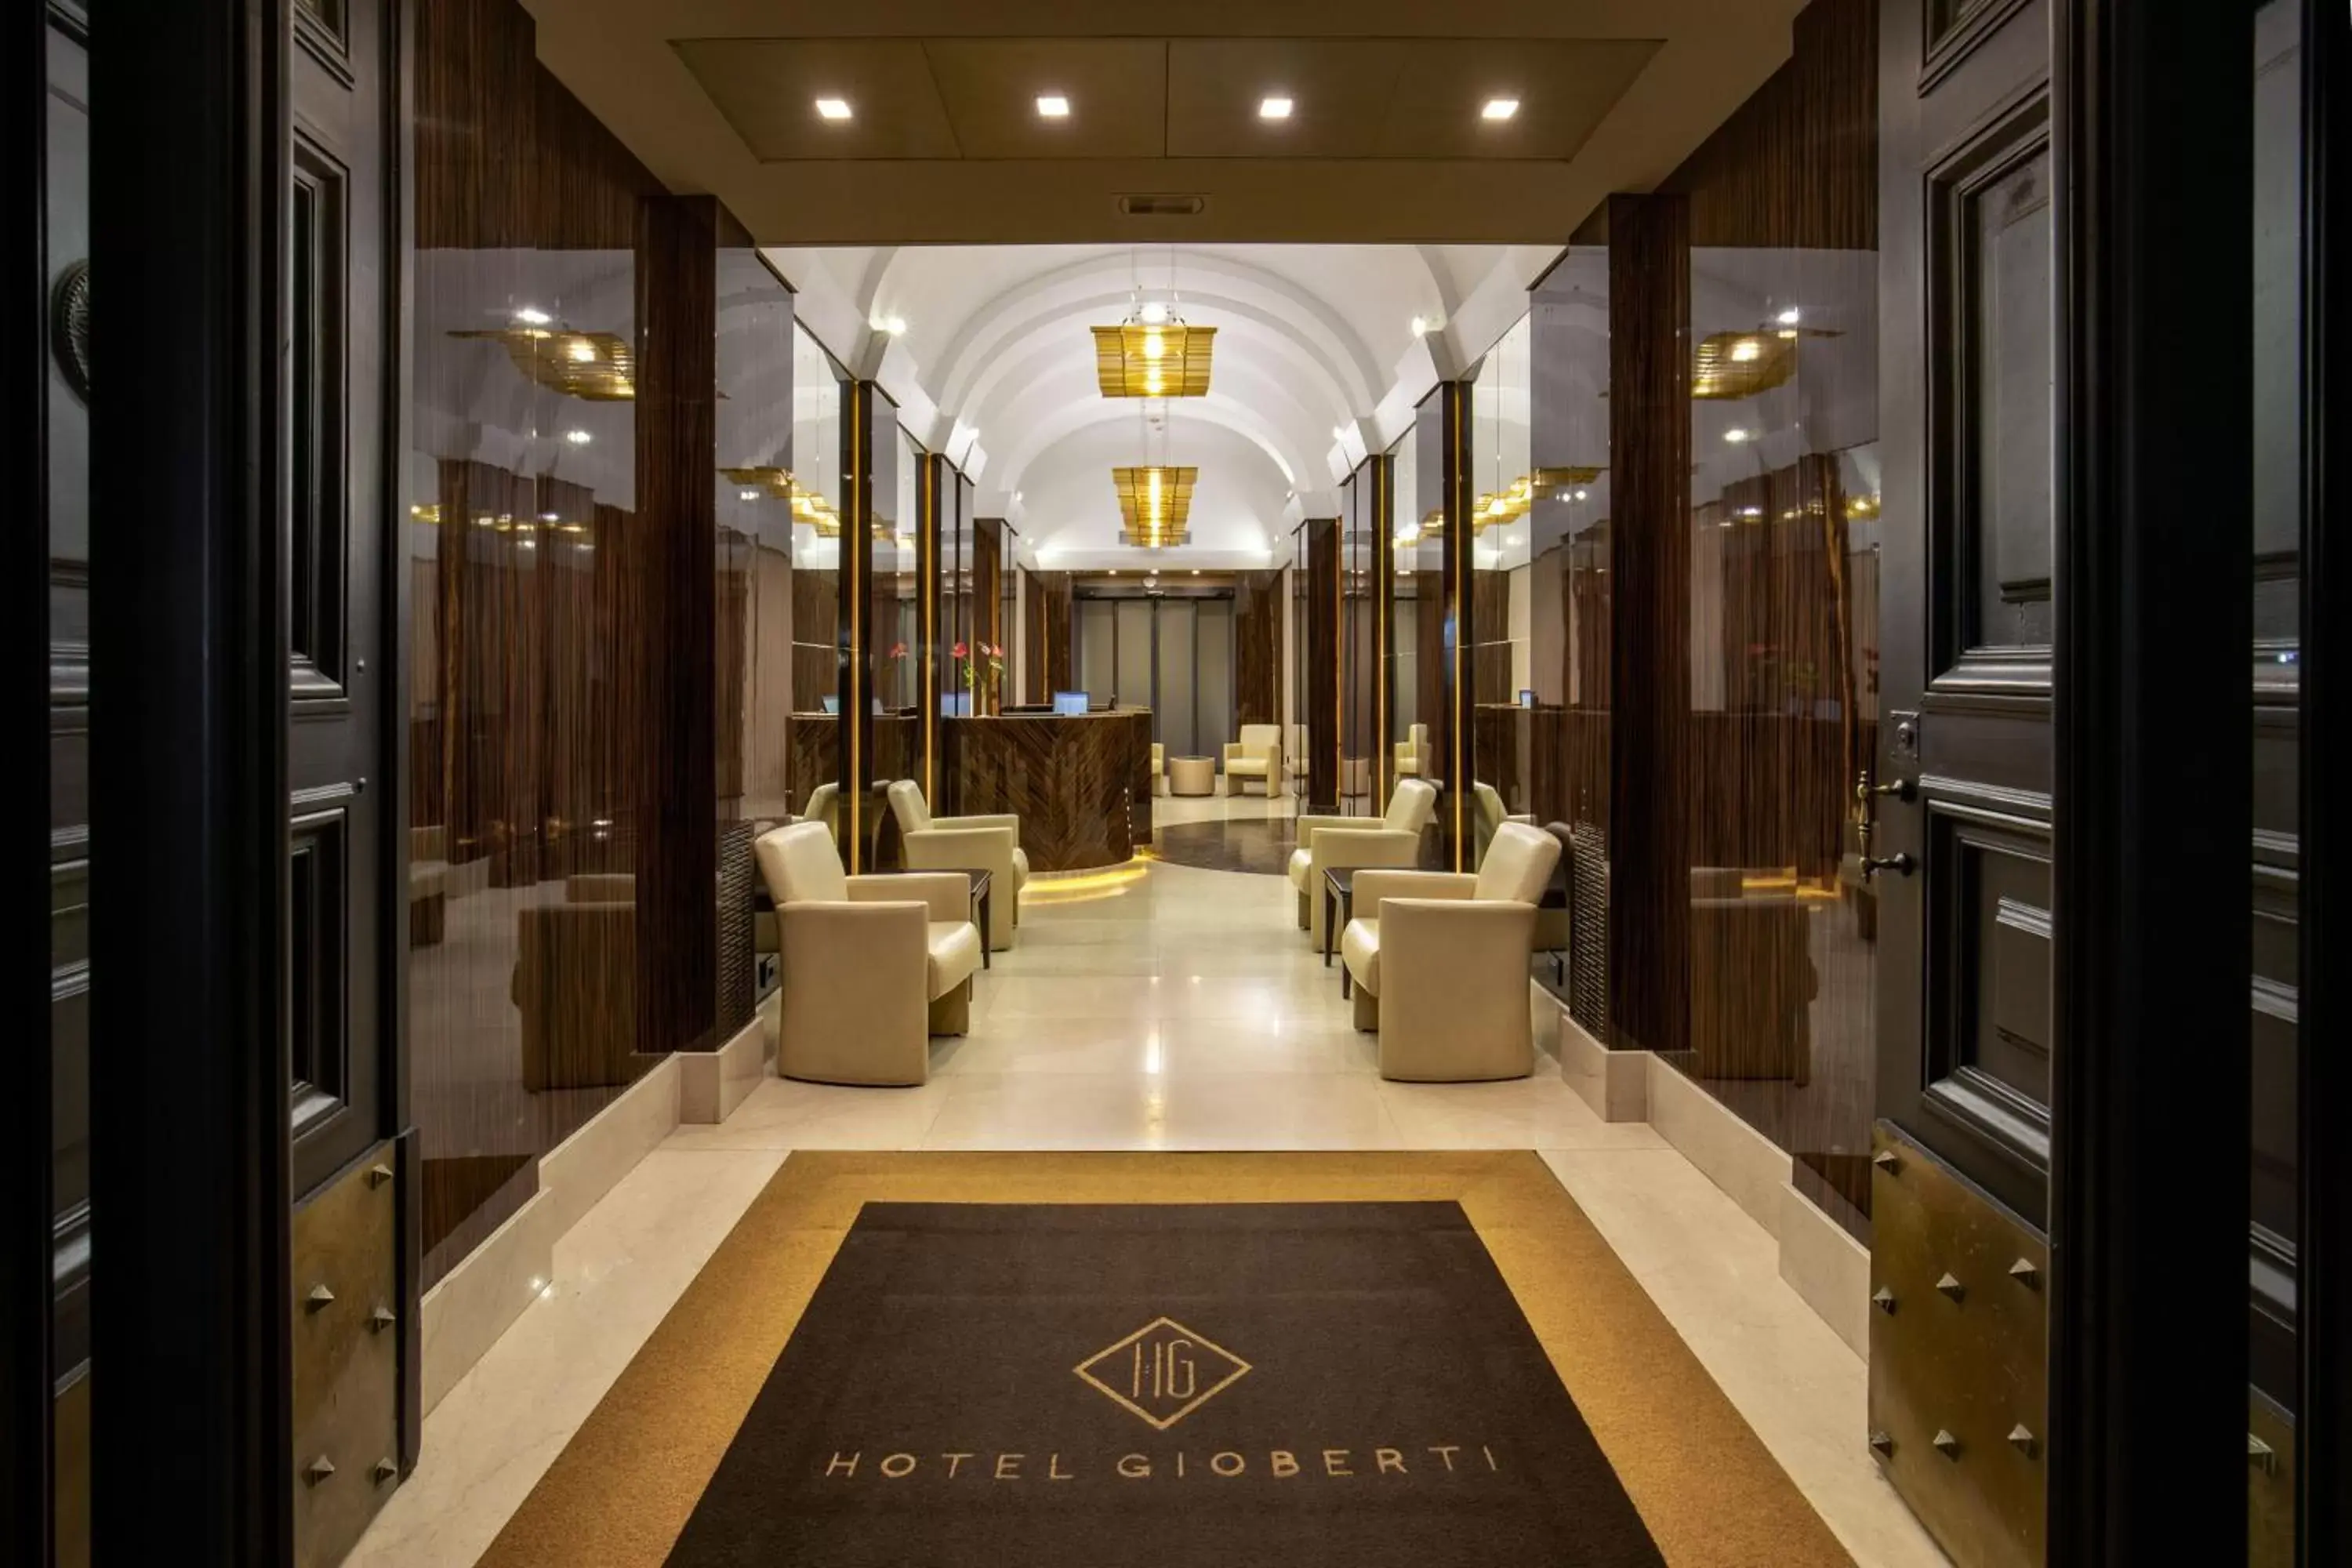 Lobby or reception in Hotel Gioberti